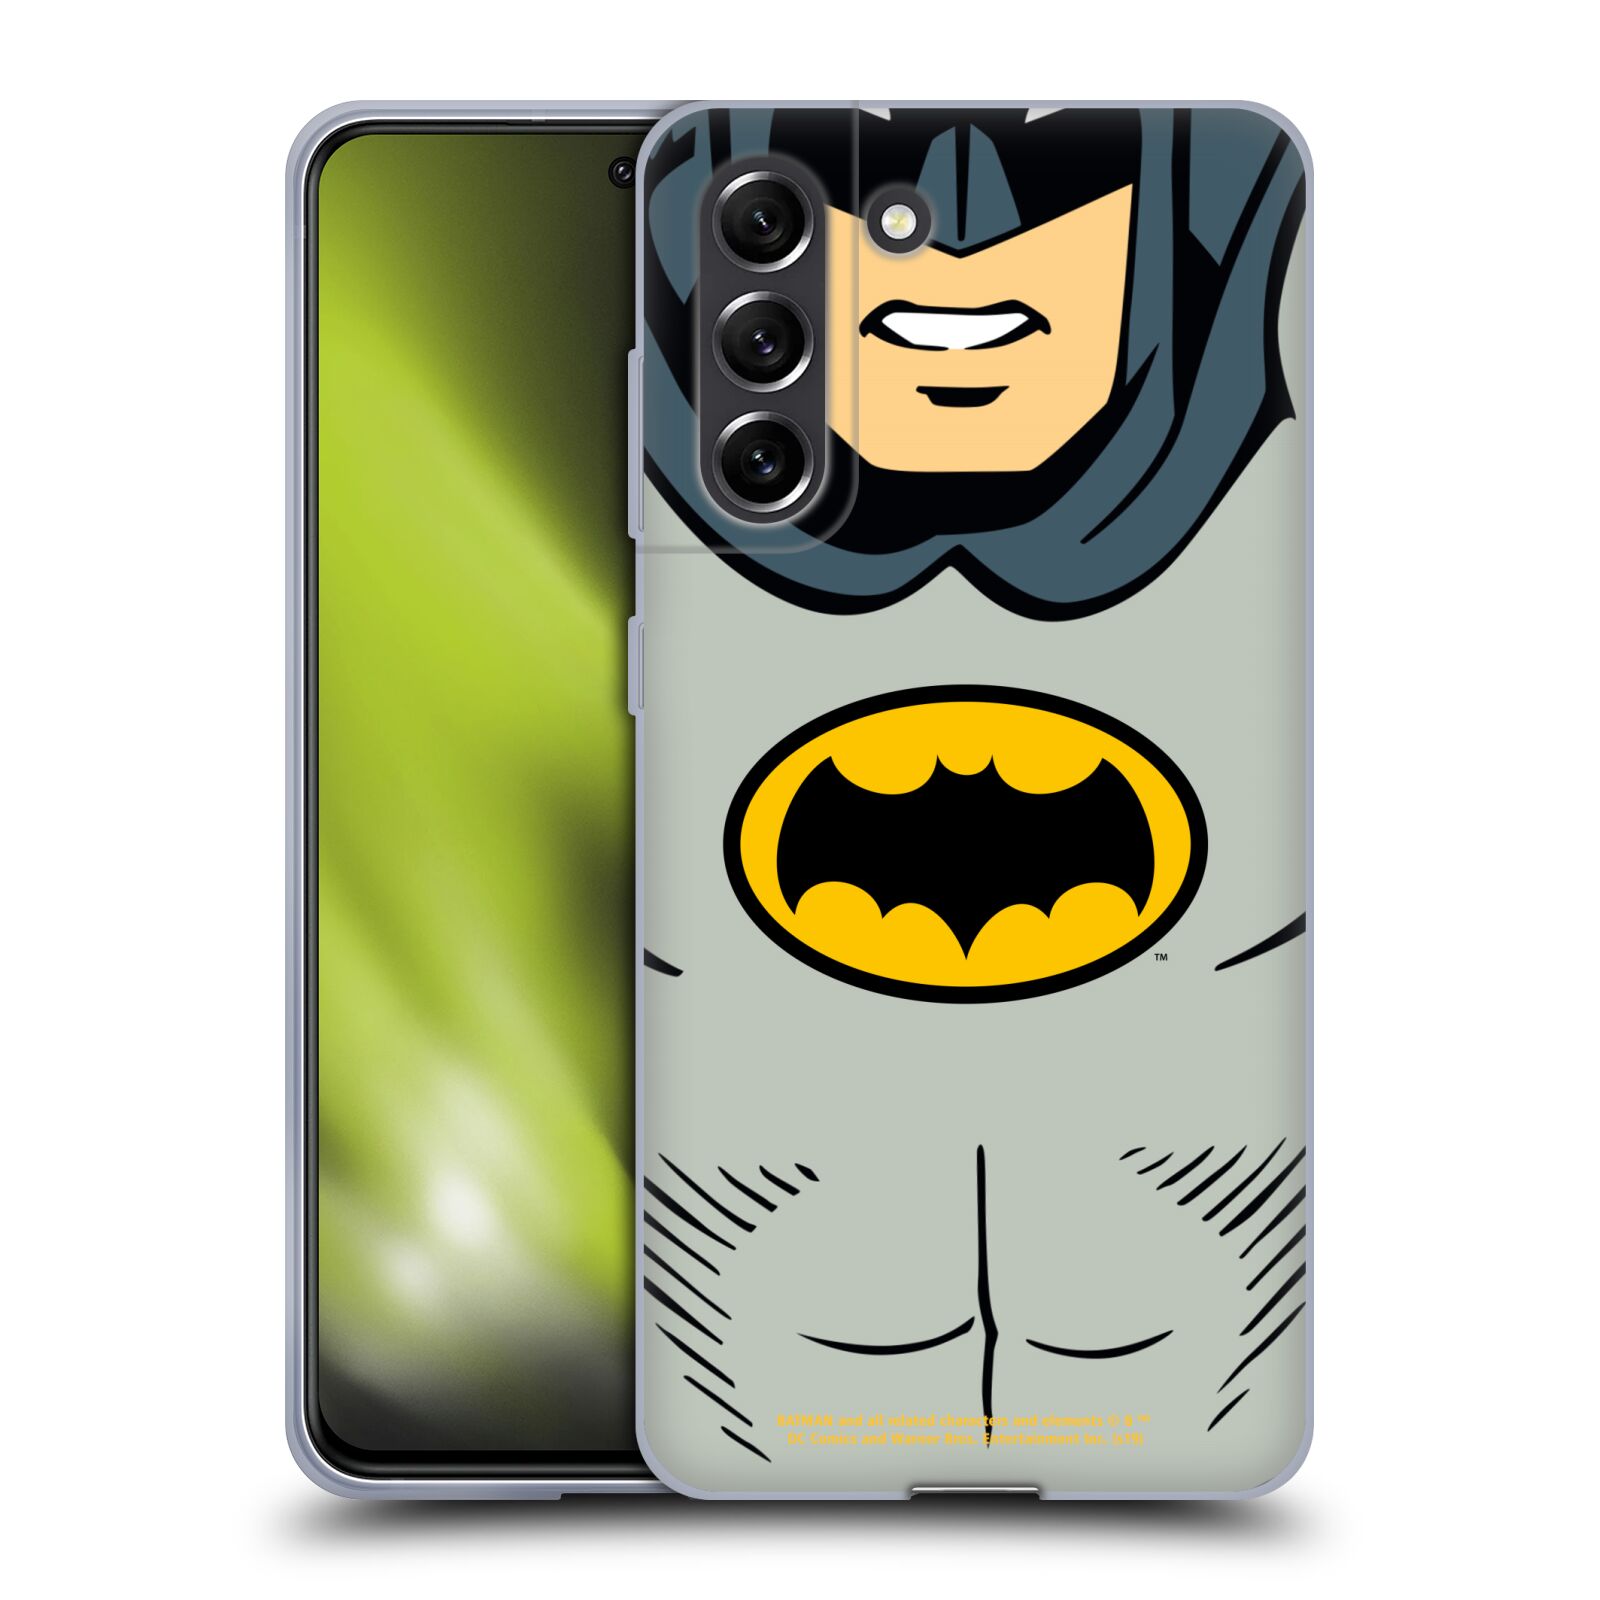 Silikonové pouzdro na mobil Samsung Galaxy S21 FE 5G - Batman (Silikonový kryt, obal, pouzdro na mobilní telefon Samsung Galaxy S21 FE 5G s licencovaným motivem Batman)